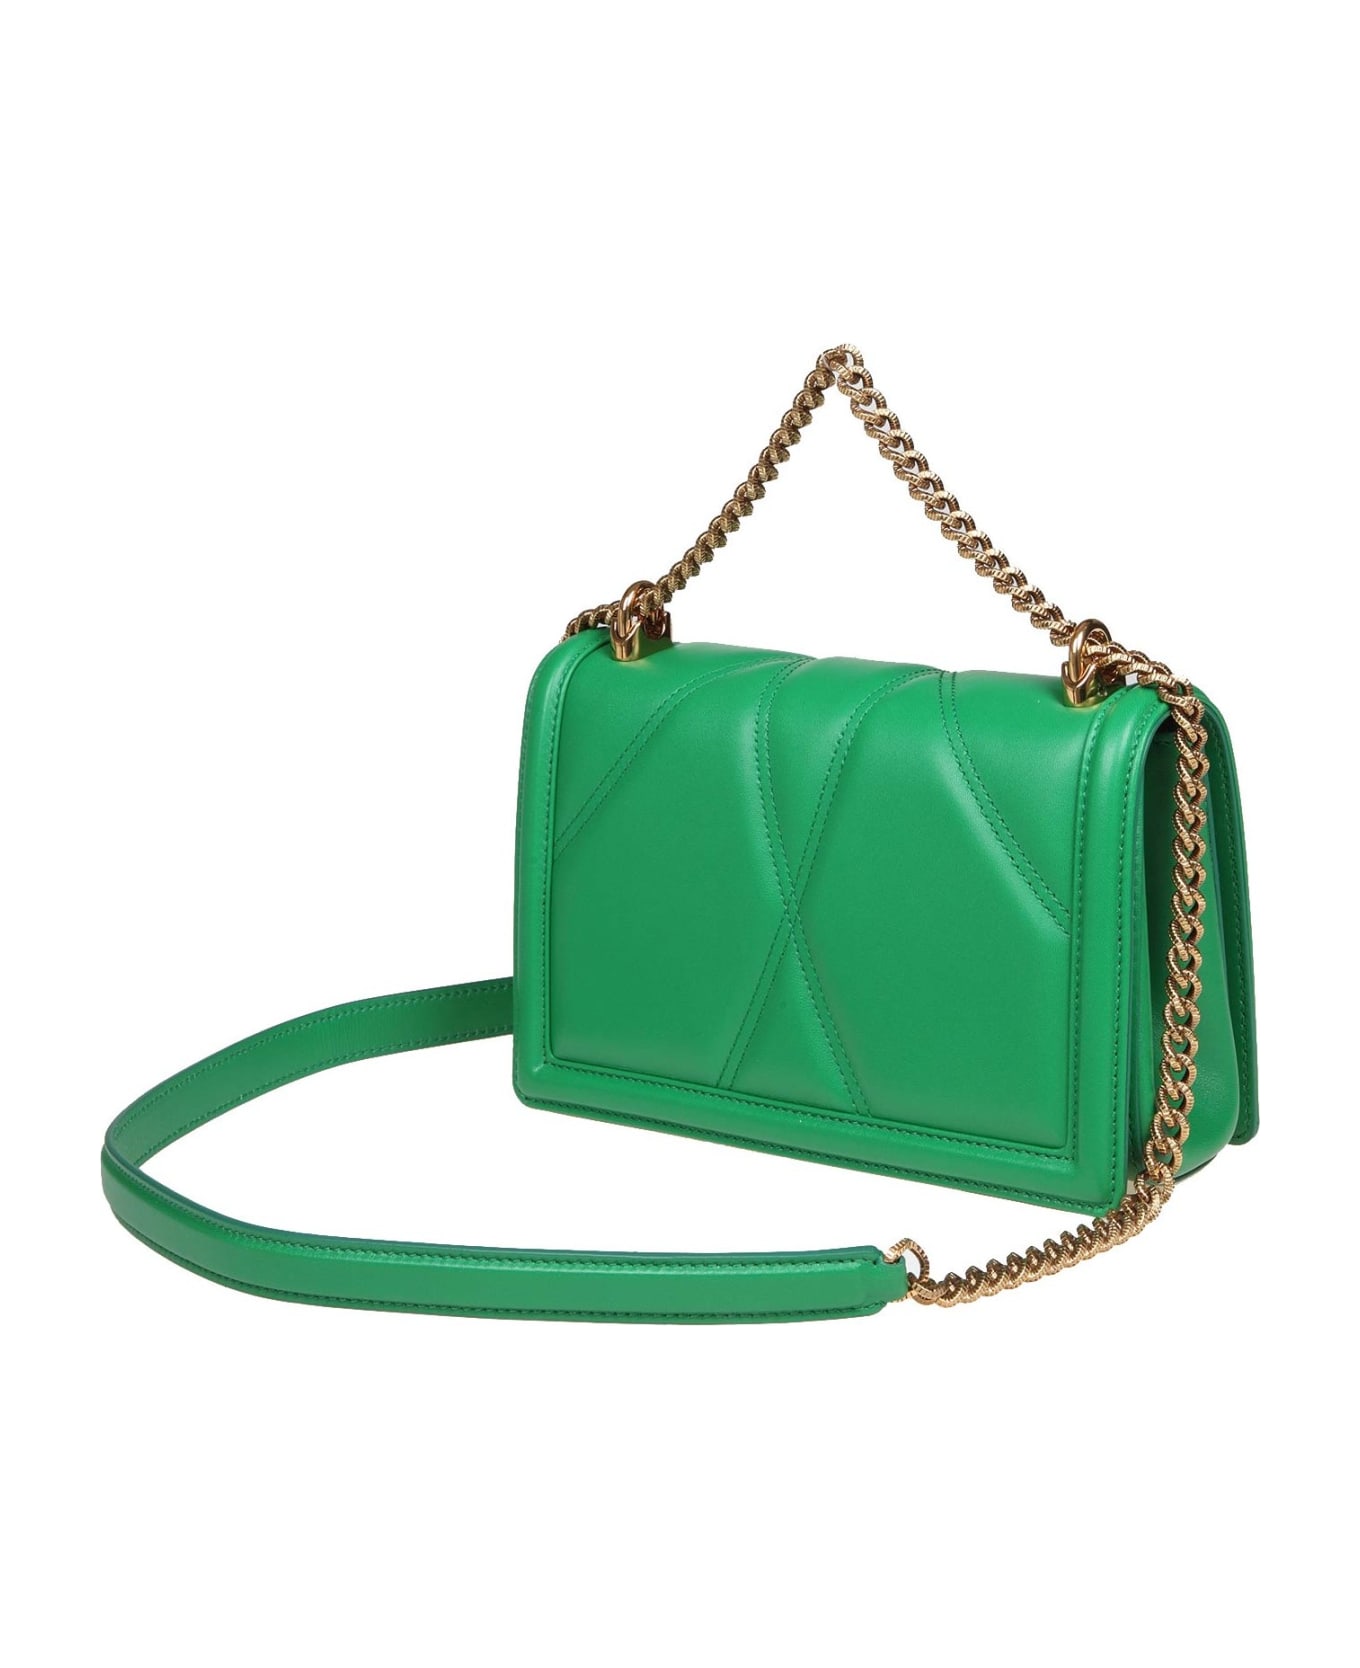 Dolce & Gabbana Devotion Bag - Green